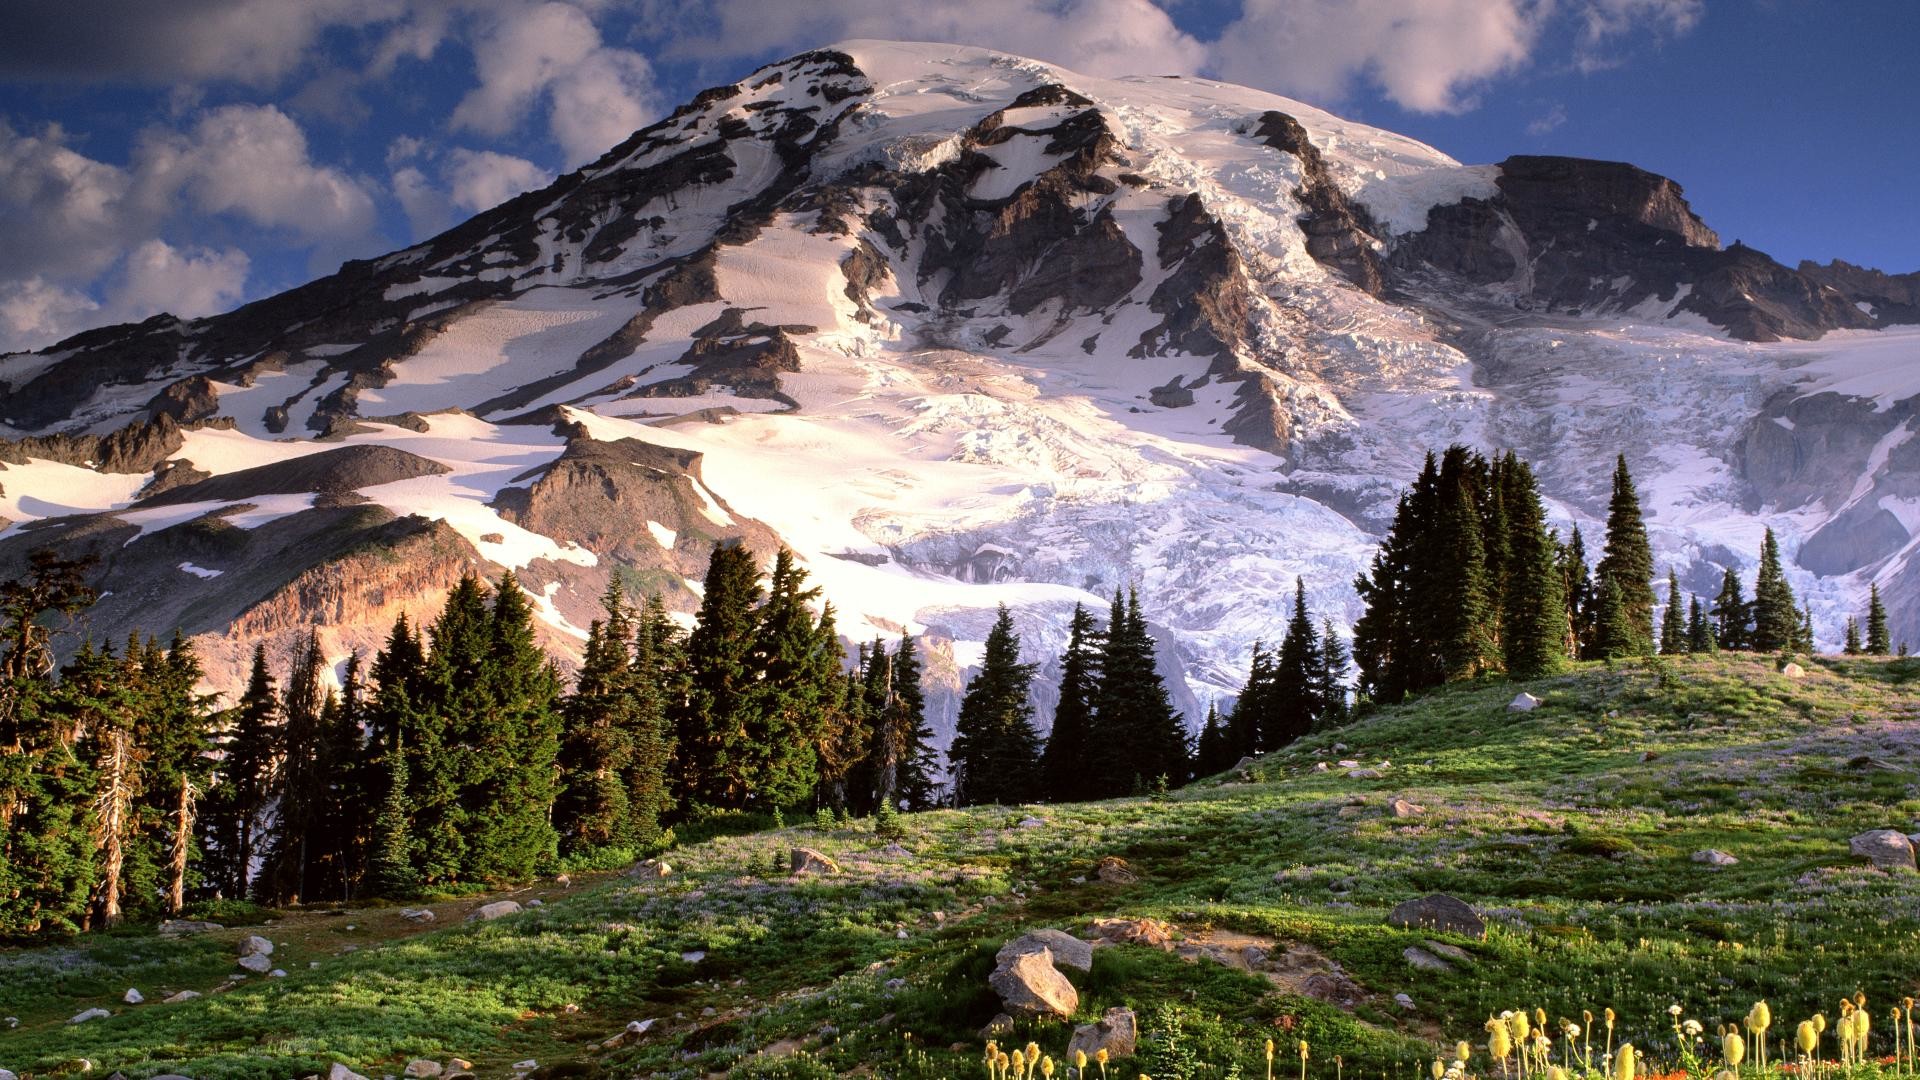 1920x1080 14,410 feet above sea level, Washington State's Mount Rainier has some of  the highest peaks